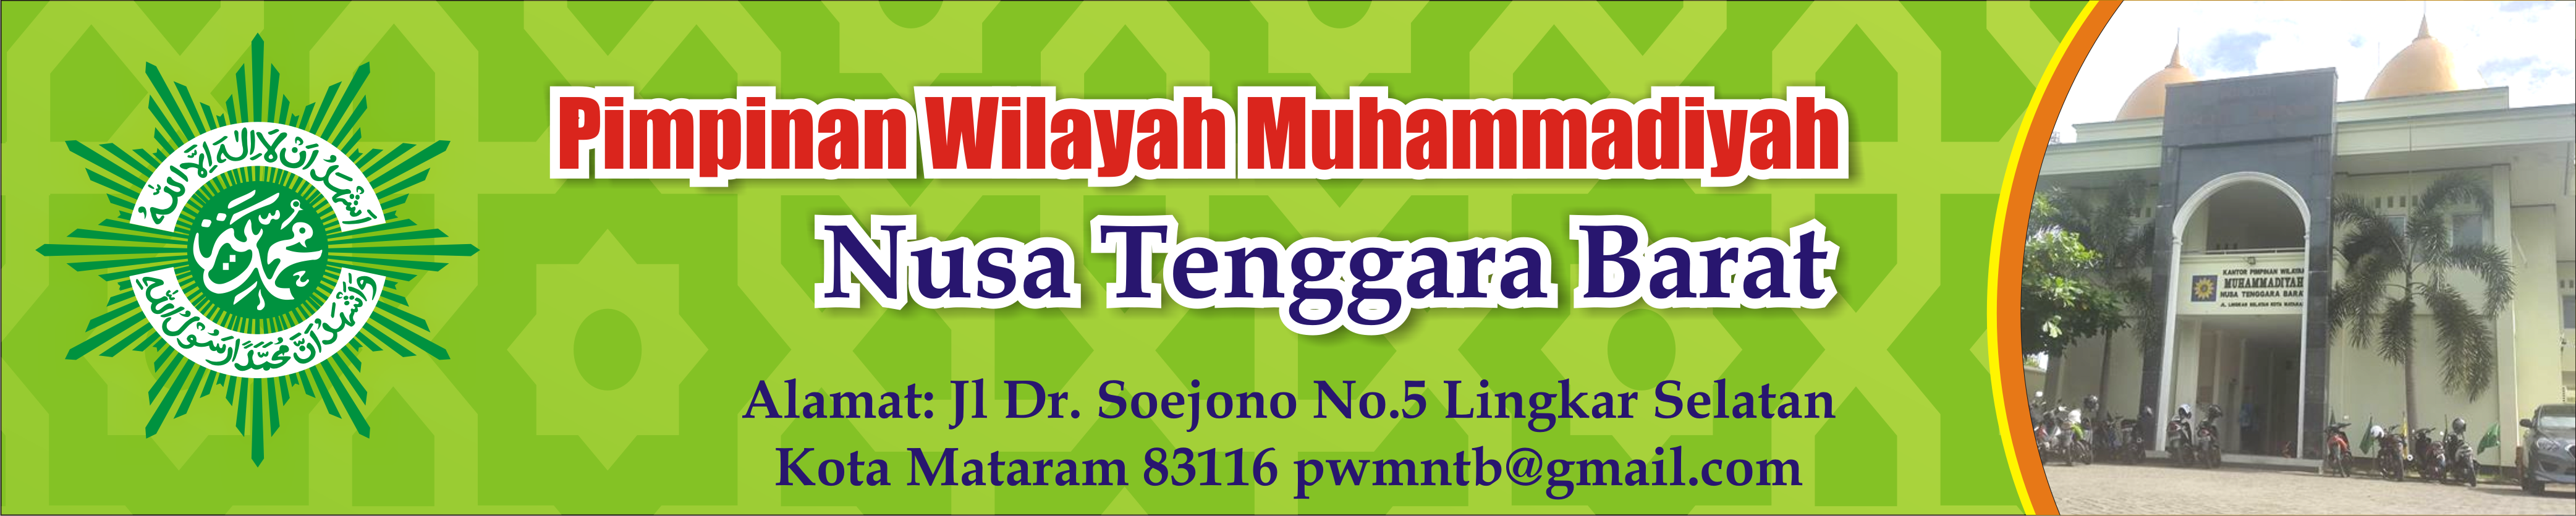 Lembaga Penelitian dan Pengembangan Pimpinan Wilayah Muhammadiyah Nusa Tenggara Barat